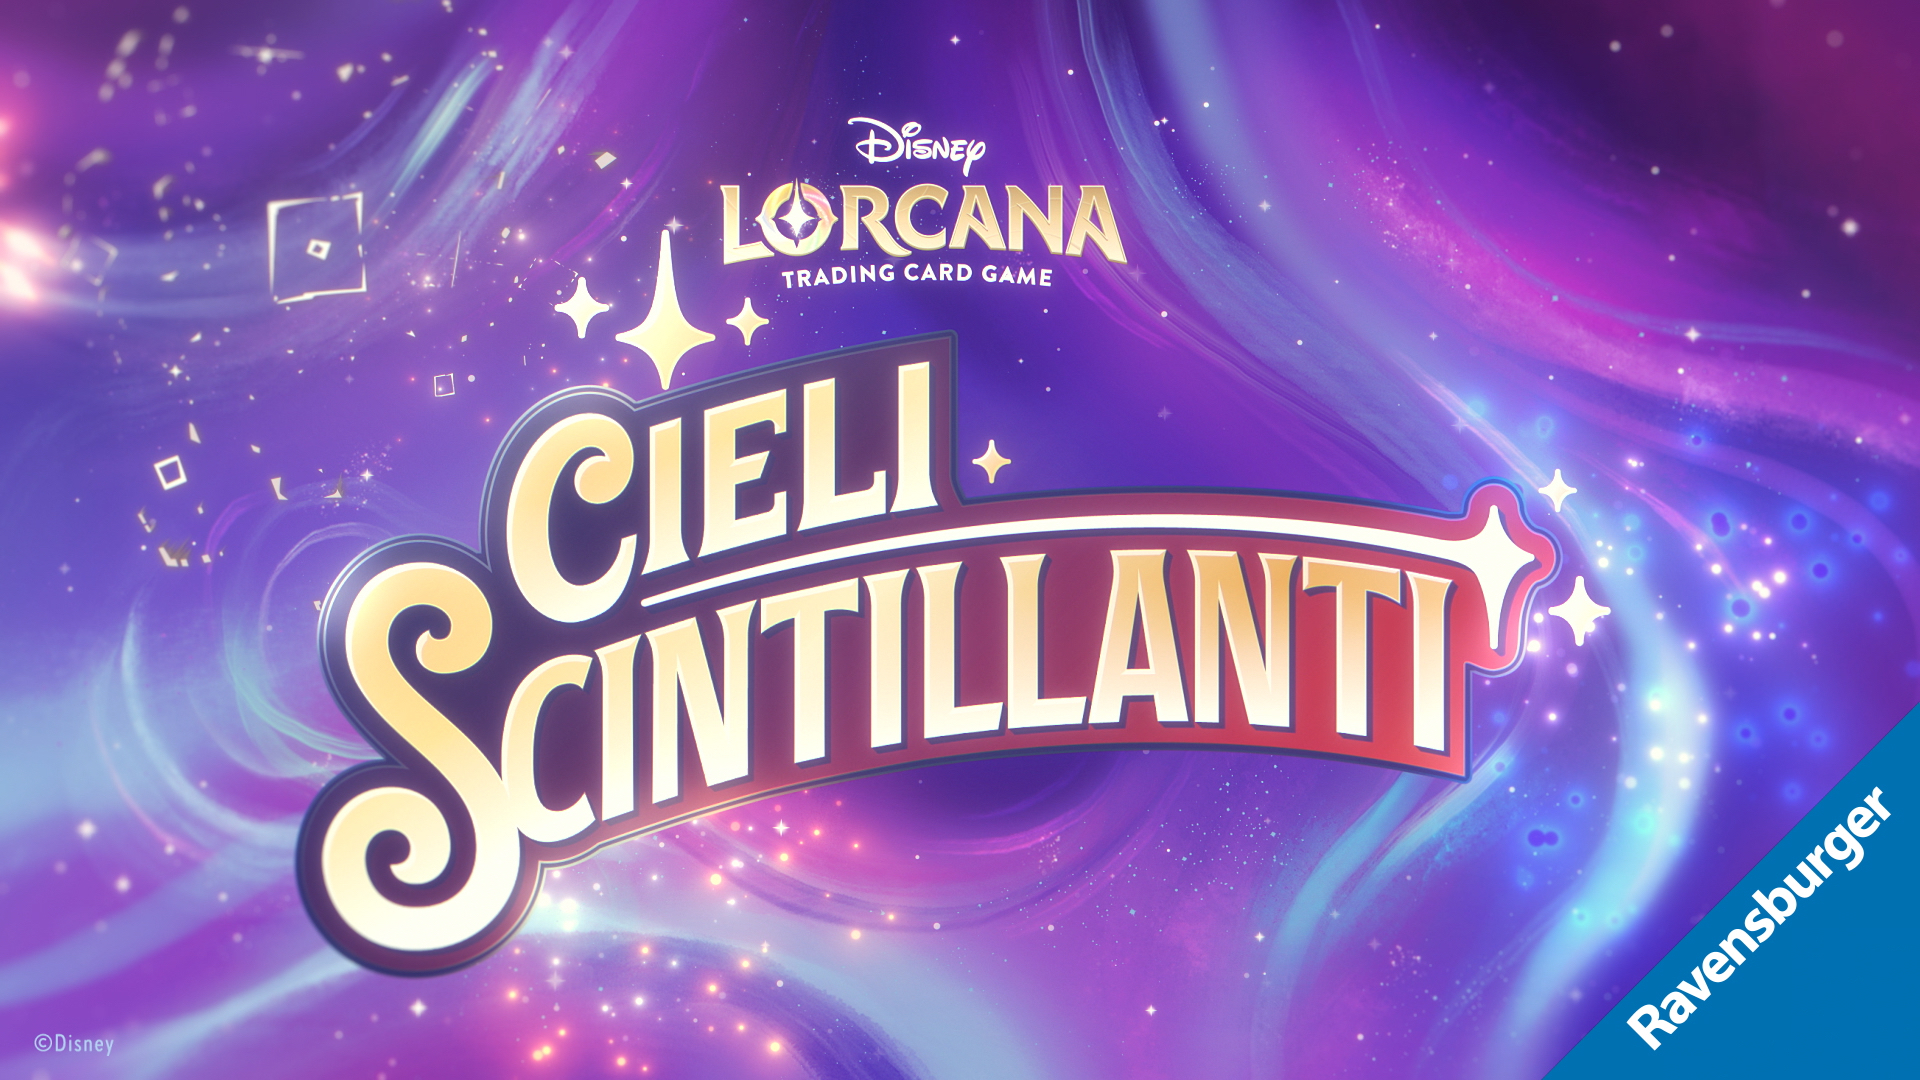 Disney Lorcana Cieli Scintillanti trailer